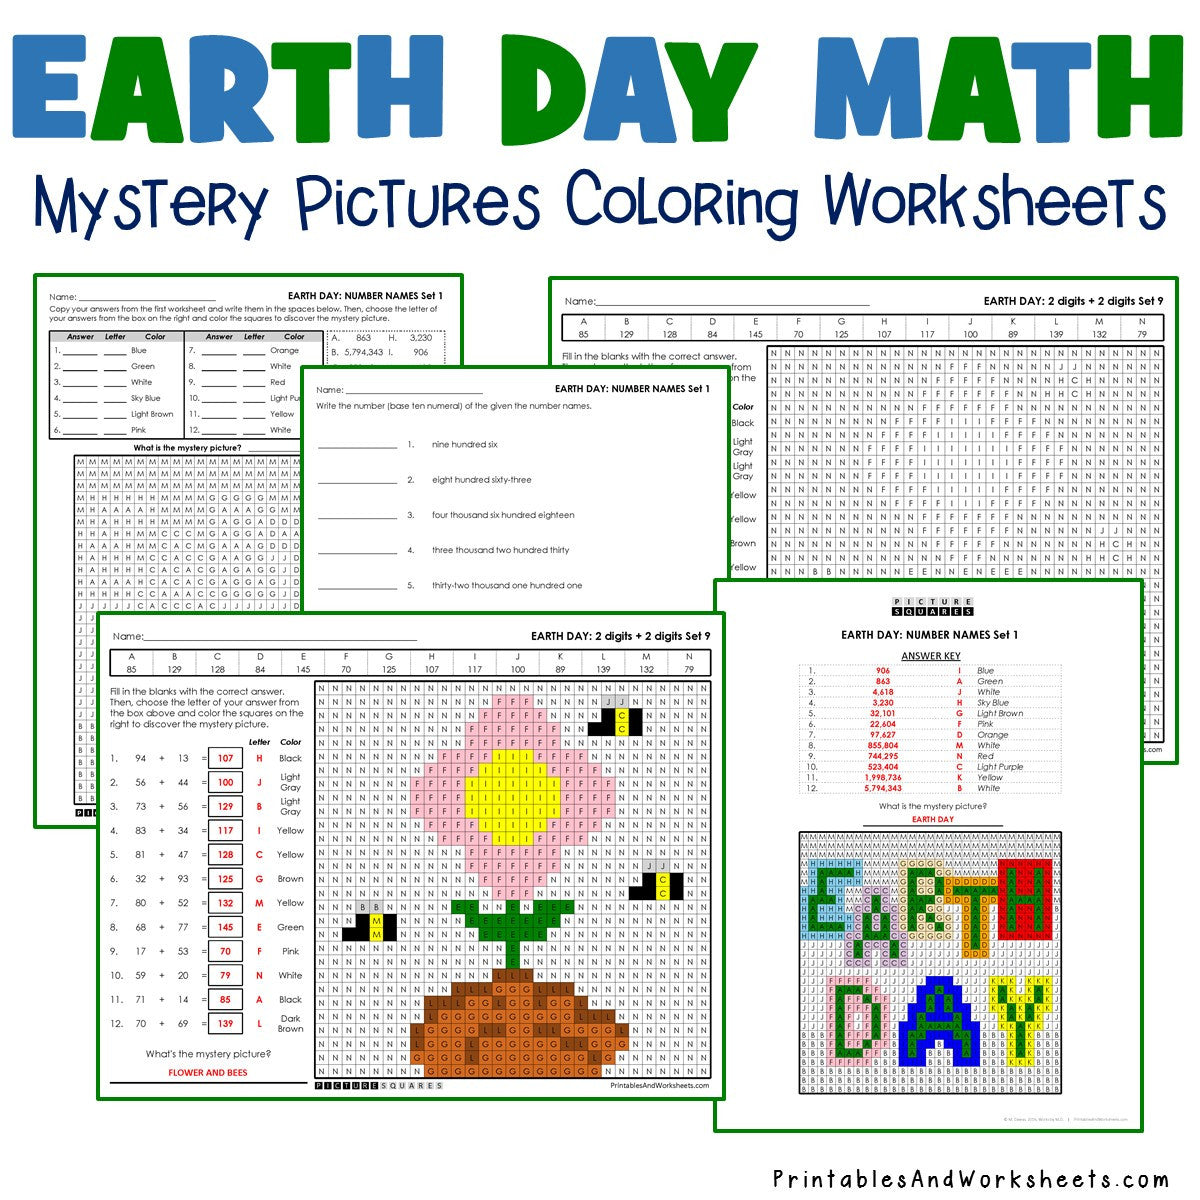 Earth Day Math Coloring Worksheets Bundle - Printables & Worksheets